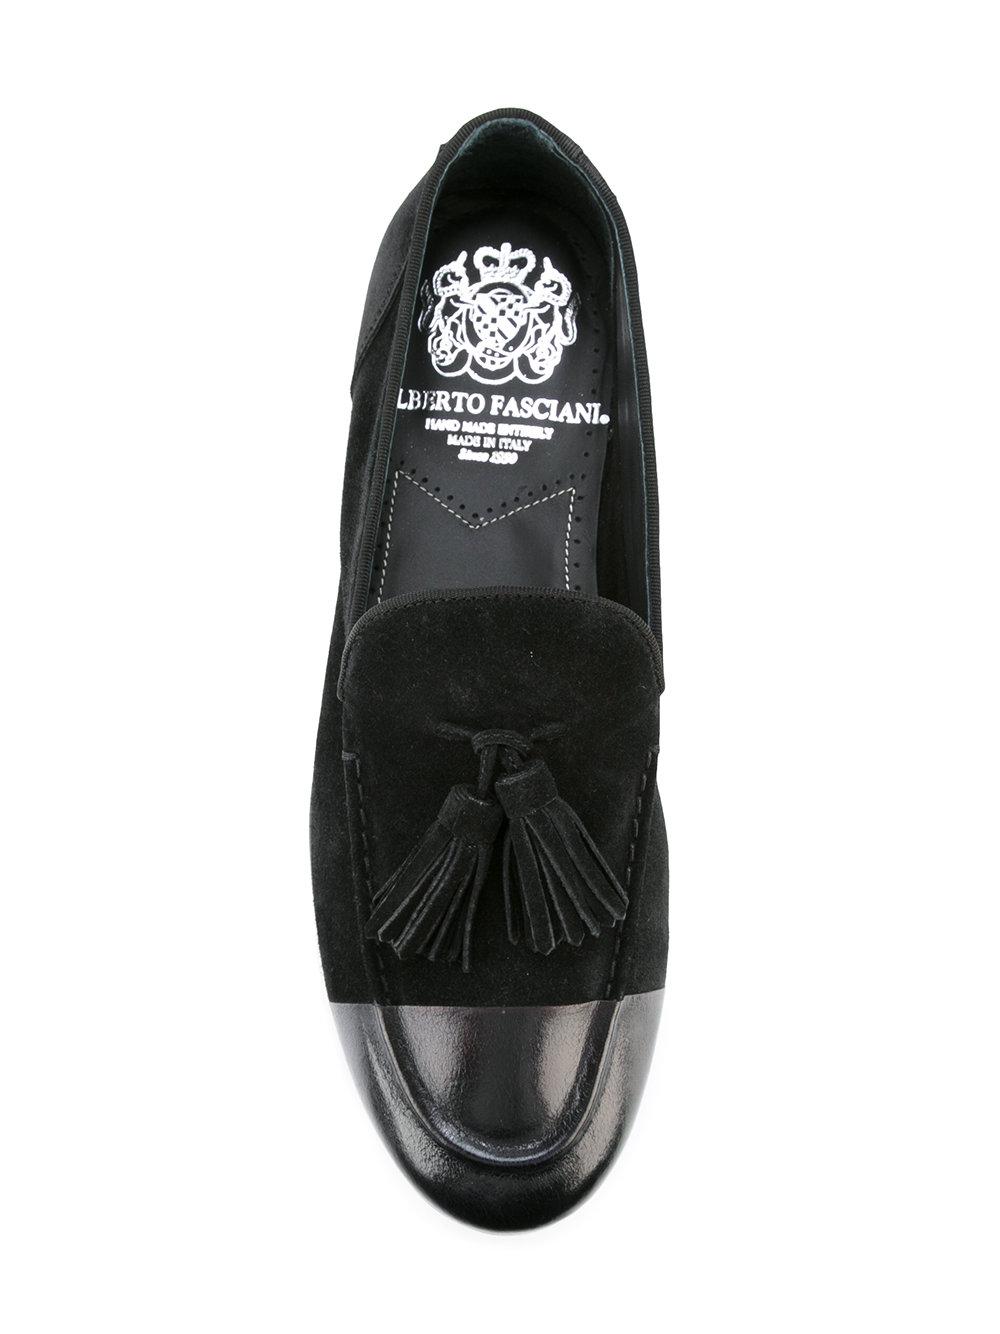 Alberto Fasciani Leather Classic Tasseled Loafers in Black for Men - Lyst